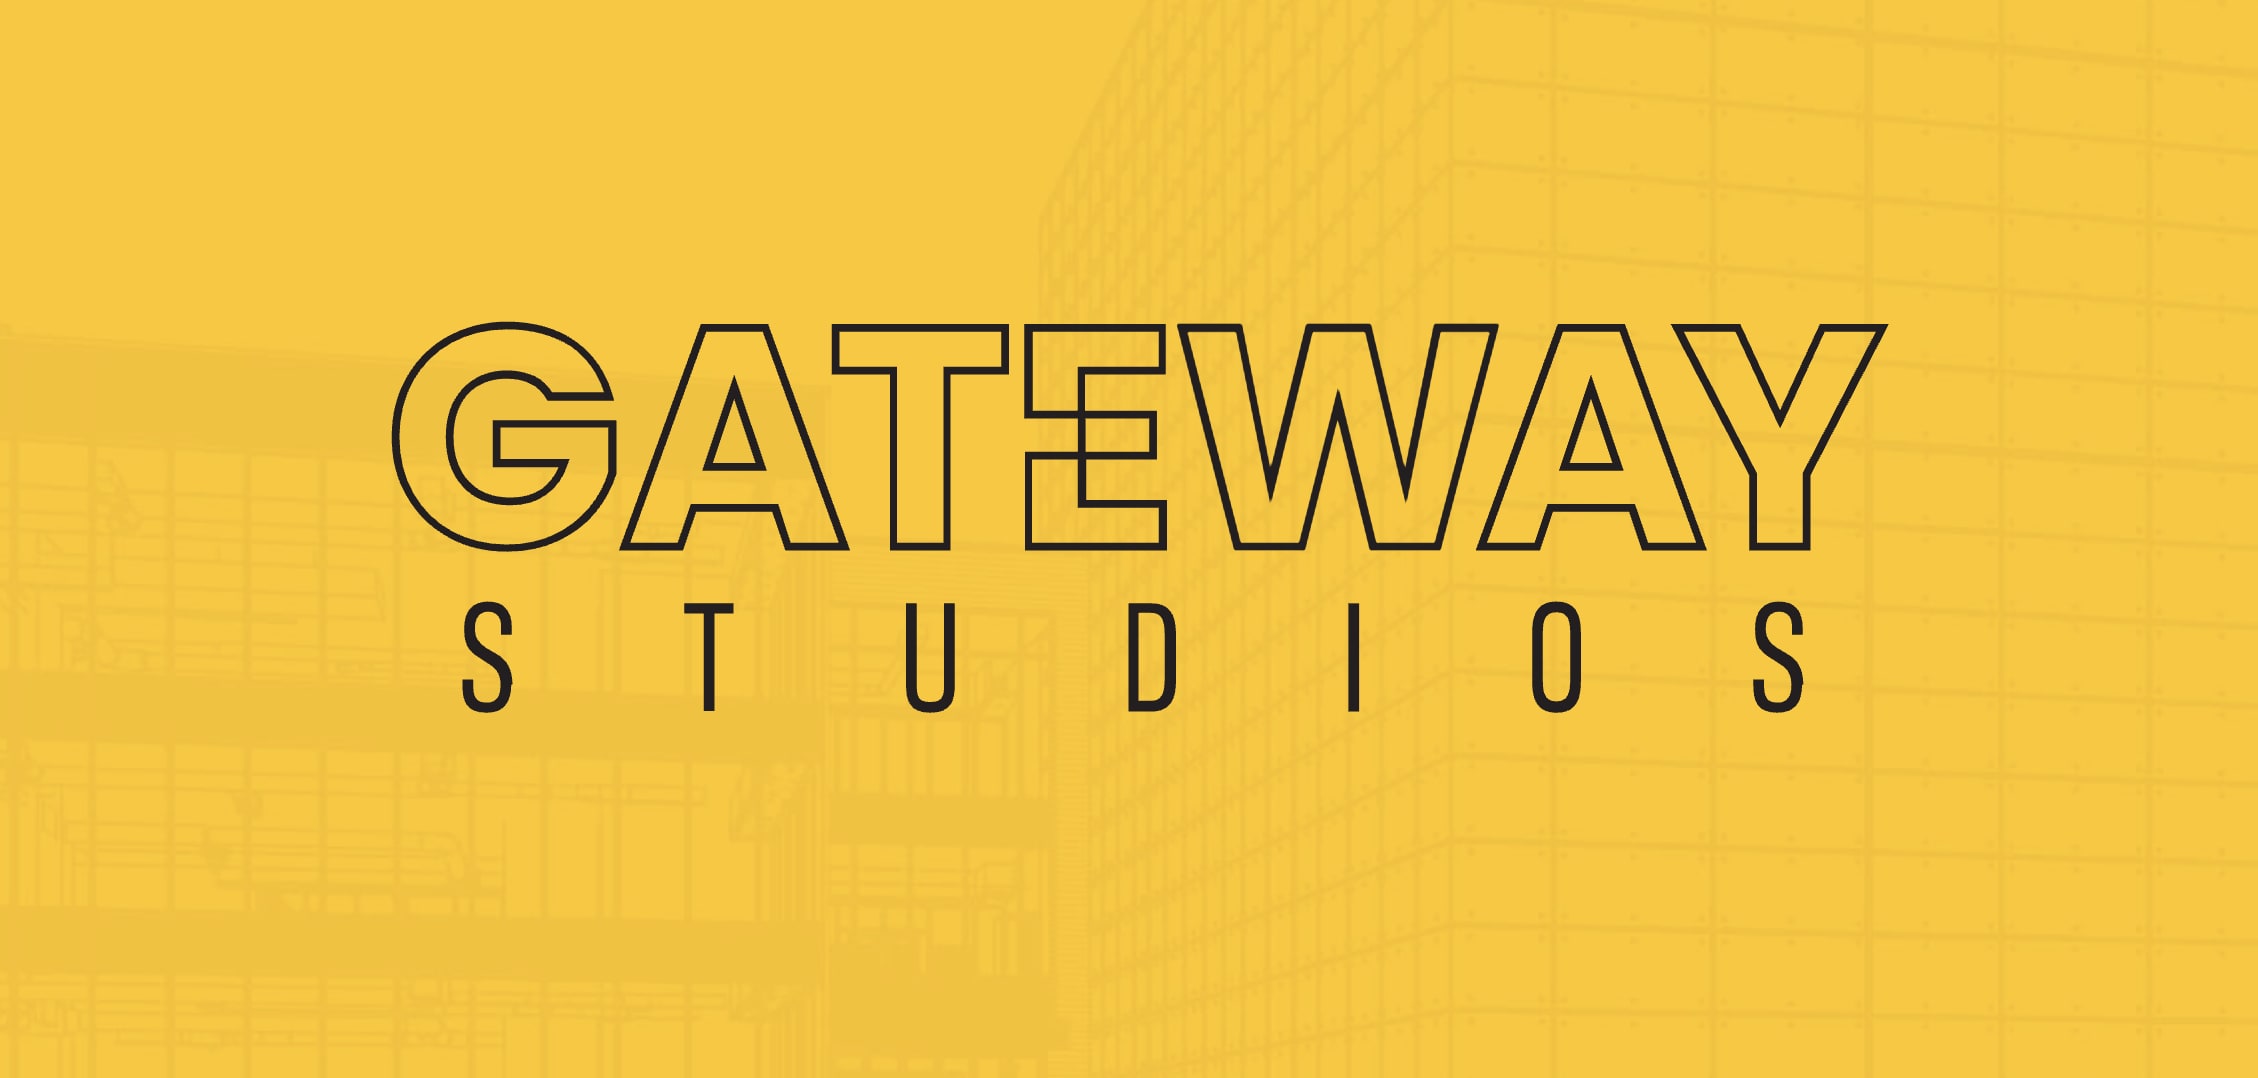 Aerosmith 50th Anniversary Concert - Gateway Studios & Production Services